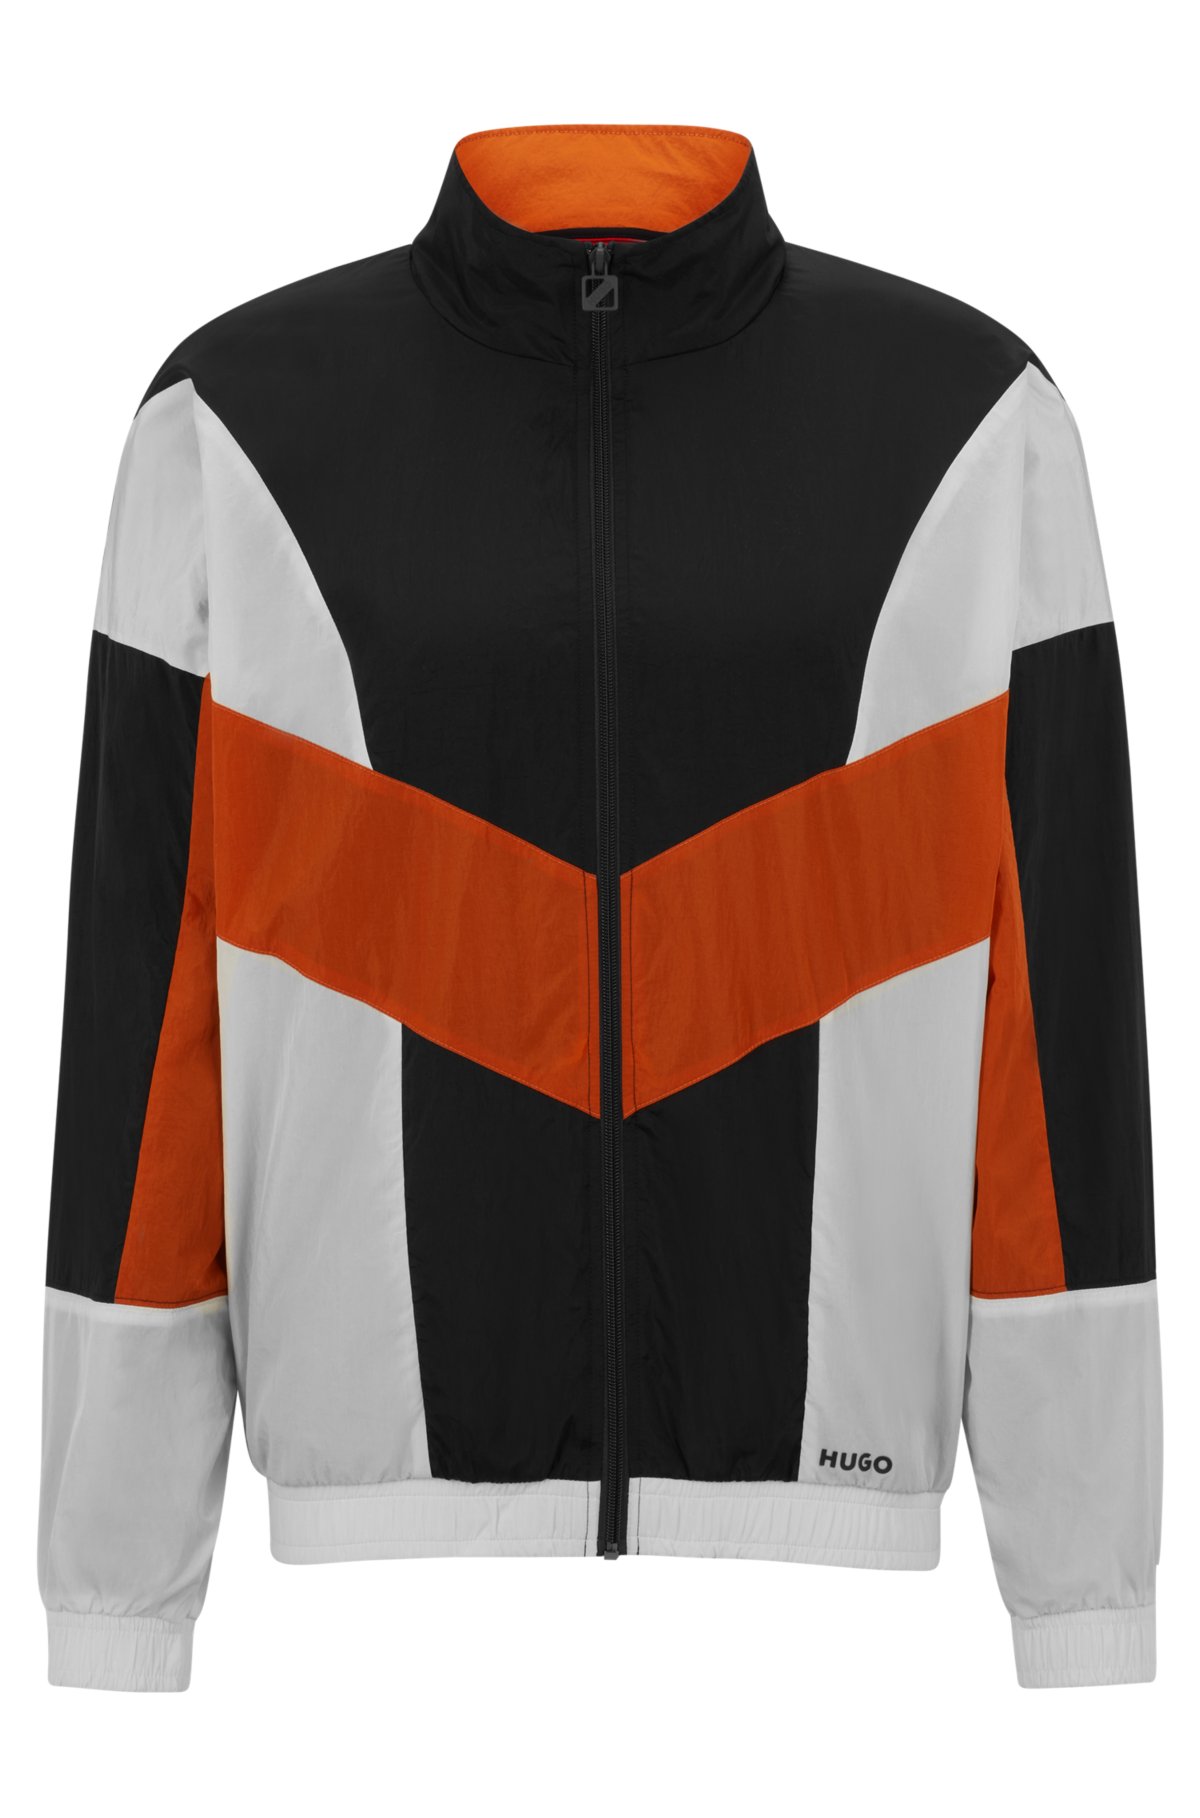 HUGO - Colour-blocked zip-up with logo jacket print